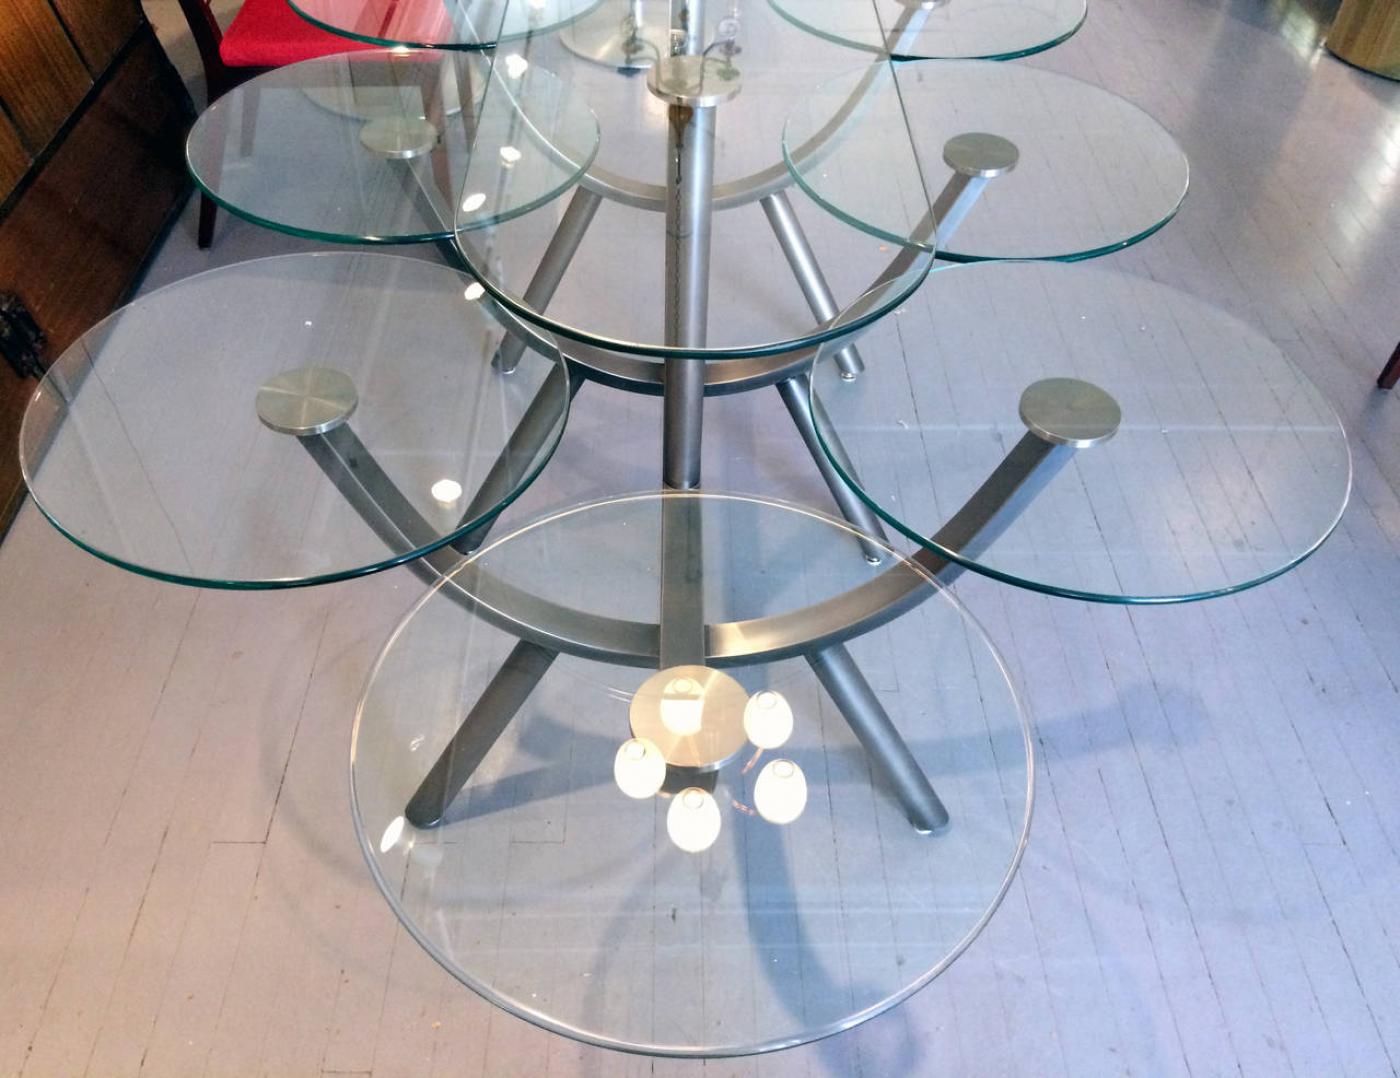  Design Institute America Glass And Steel Banquet Table By Design Institute Of America 114852 51934 